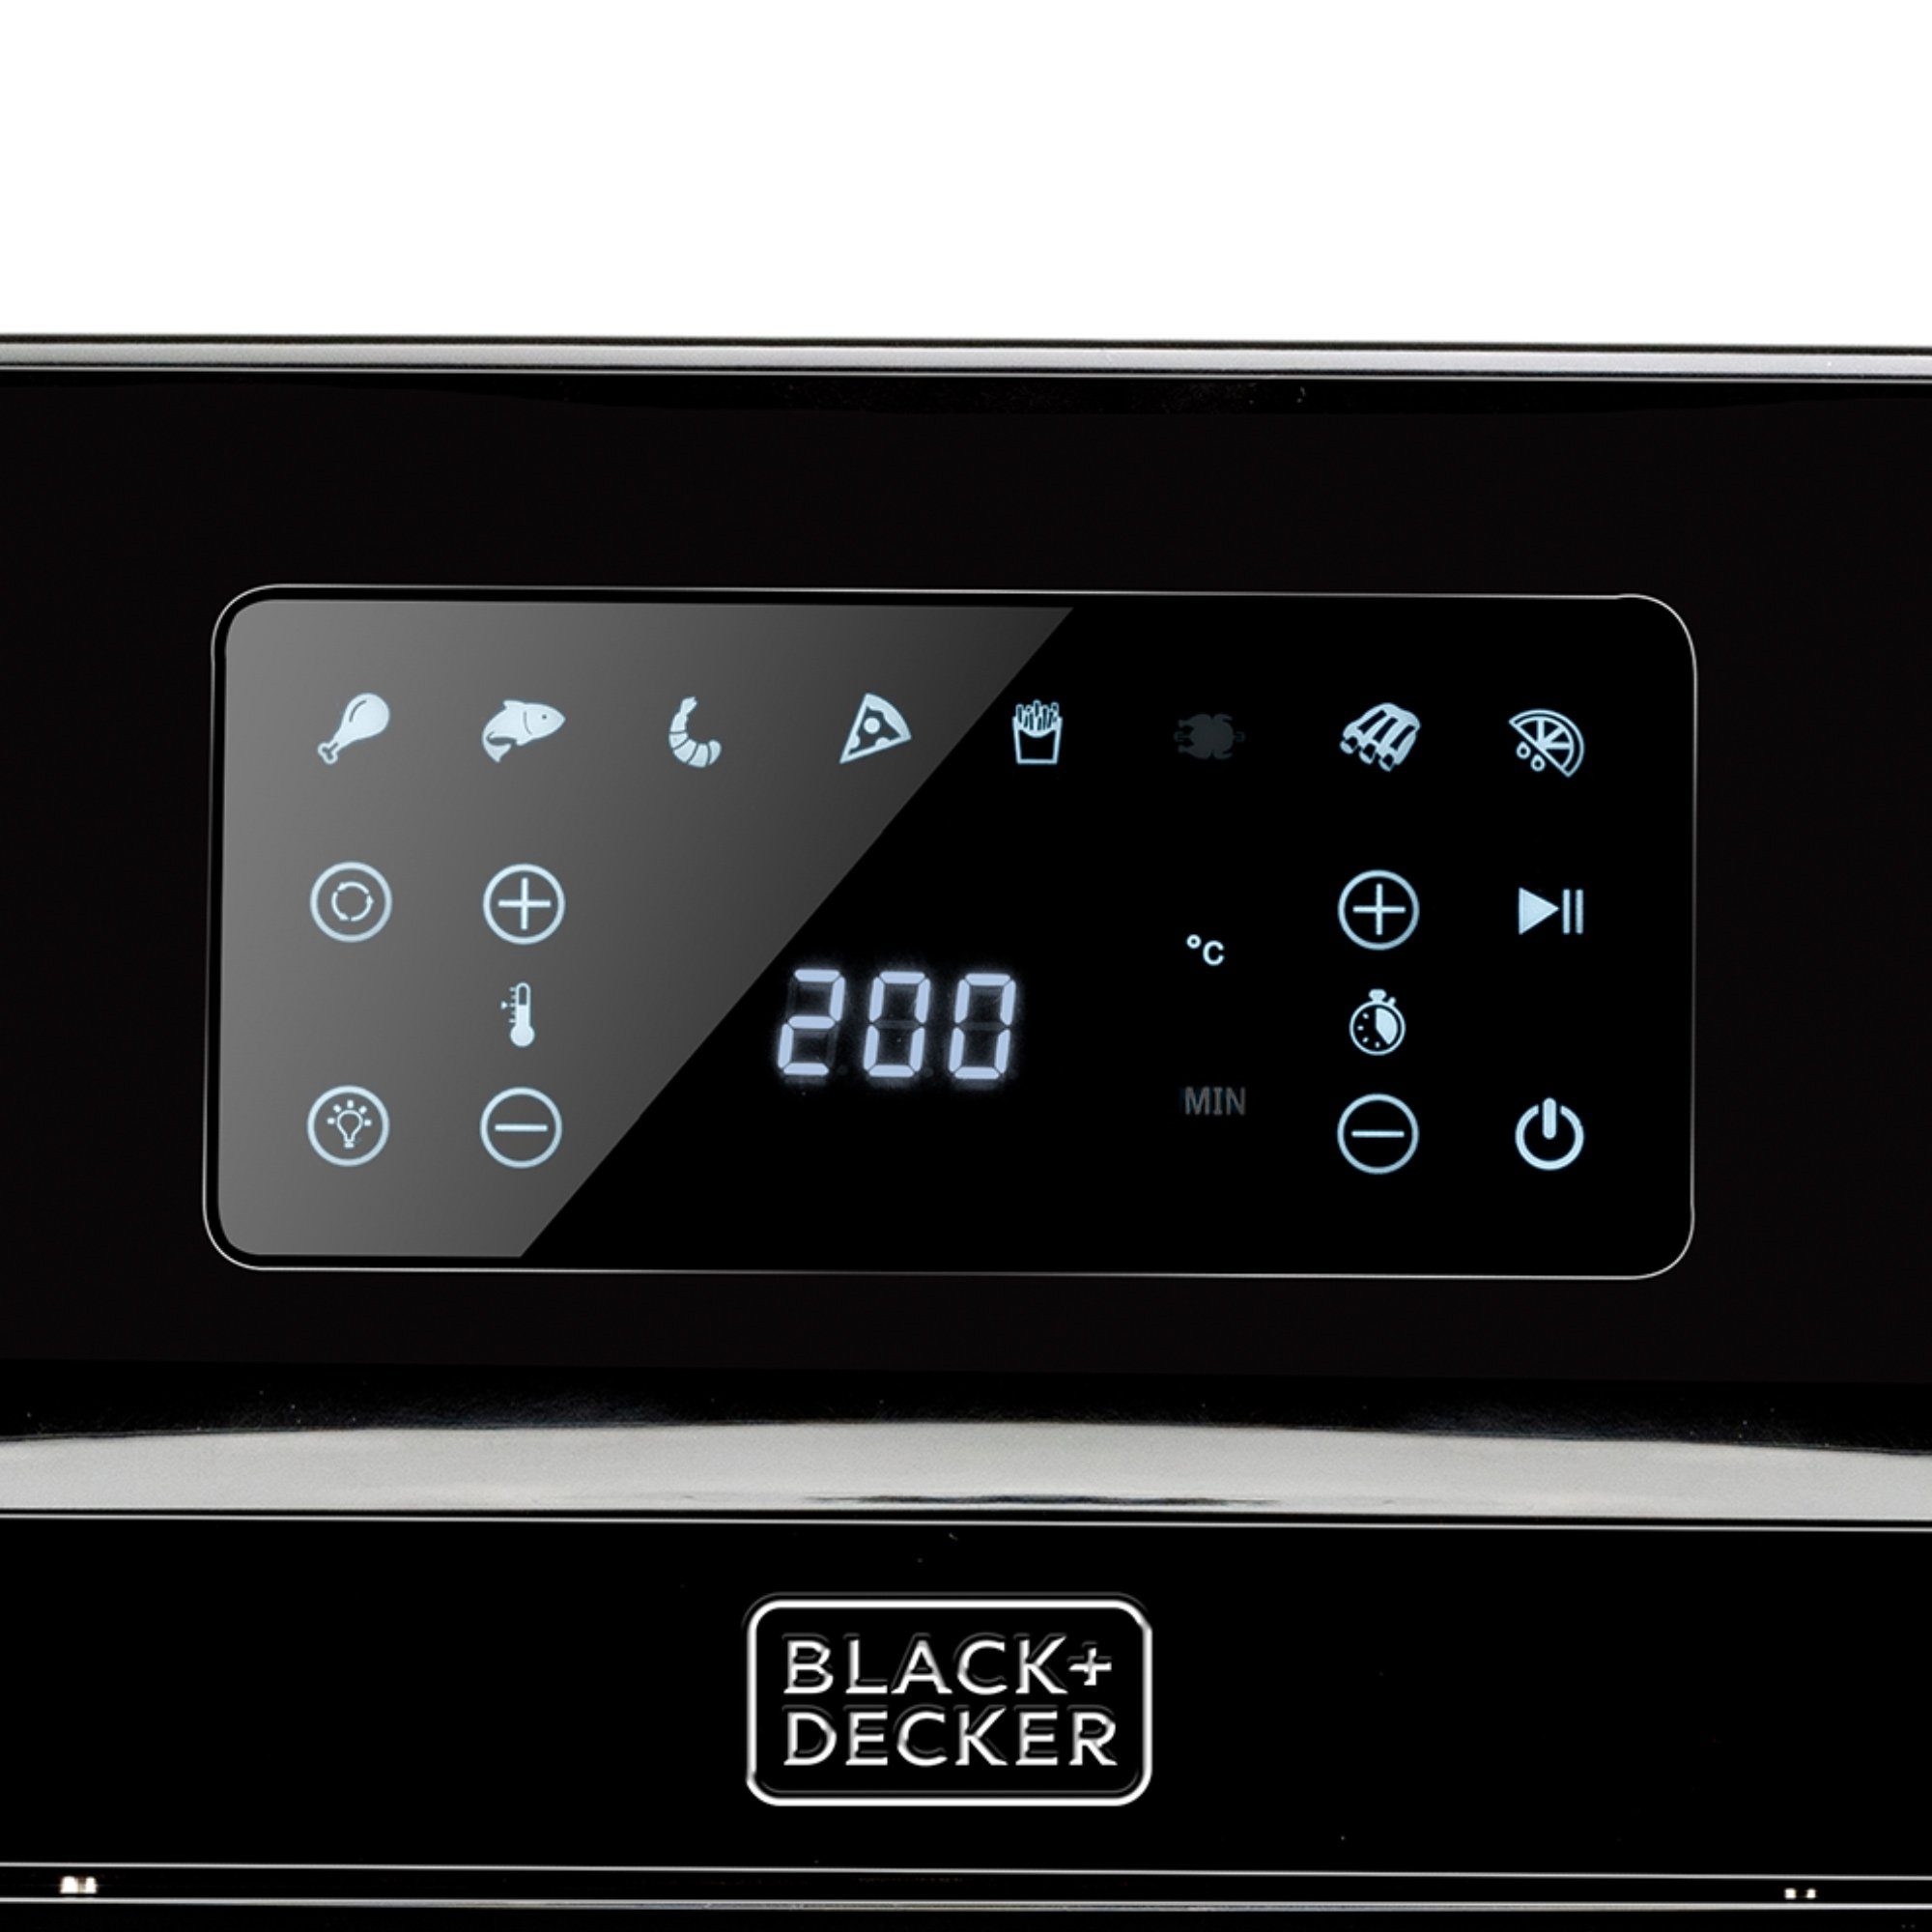 Decker Zwei BXAFO1200E, Black Heißluftfritteuse, Black Minibackofen & Decker Röste +